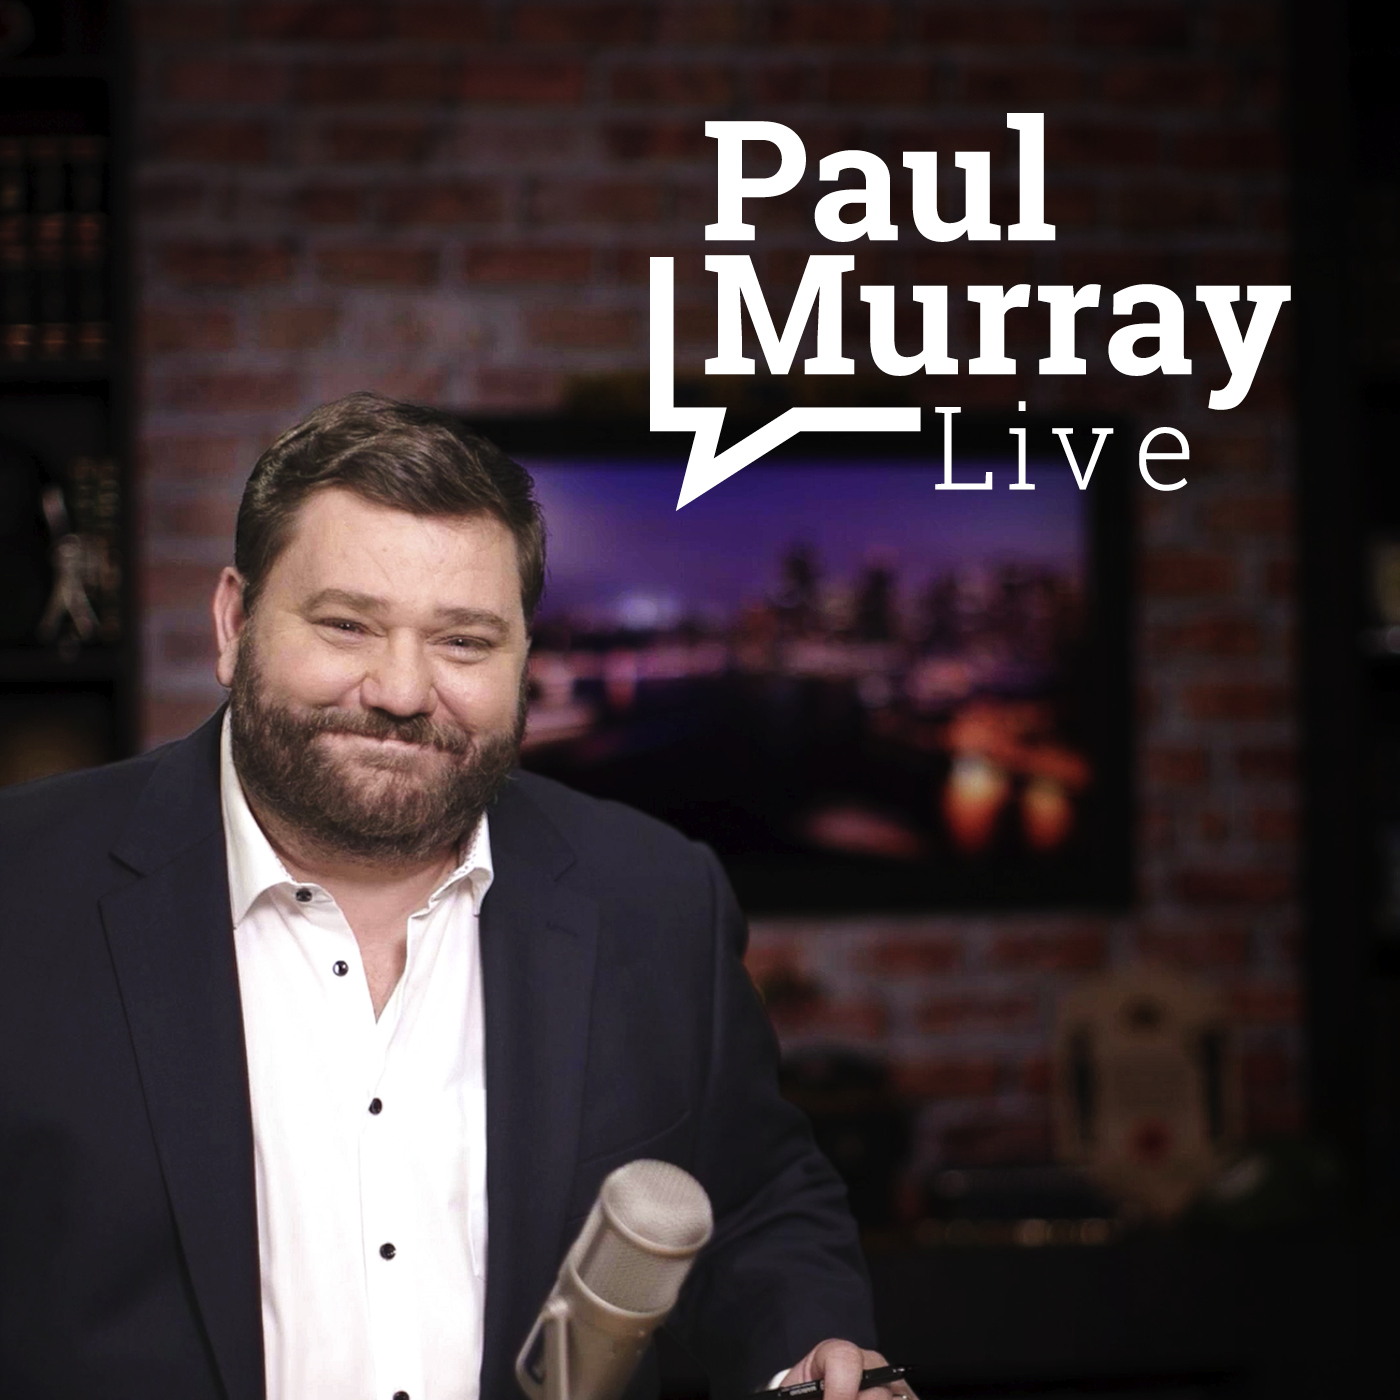 Paul Murray Live, Tuesday 7th July